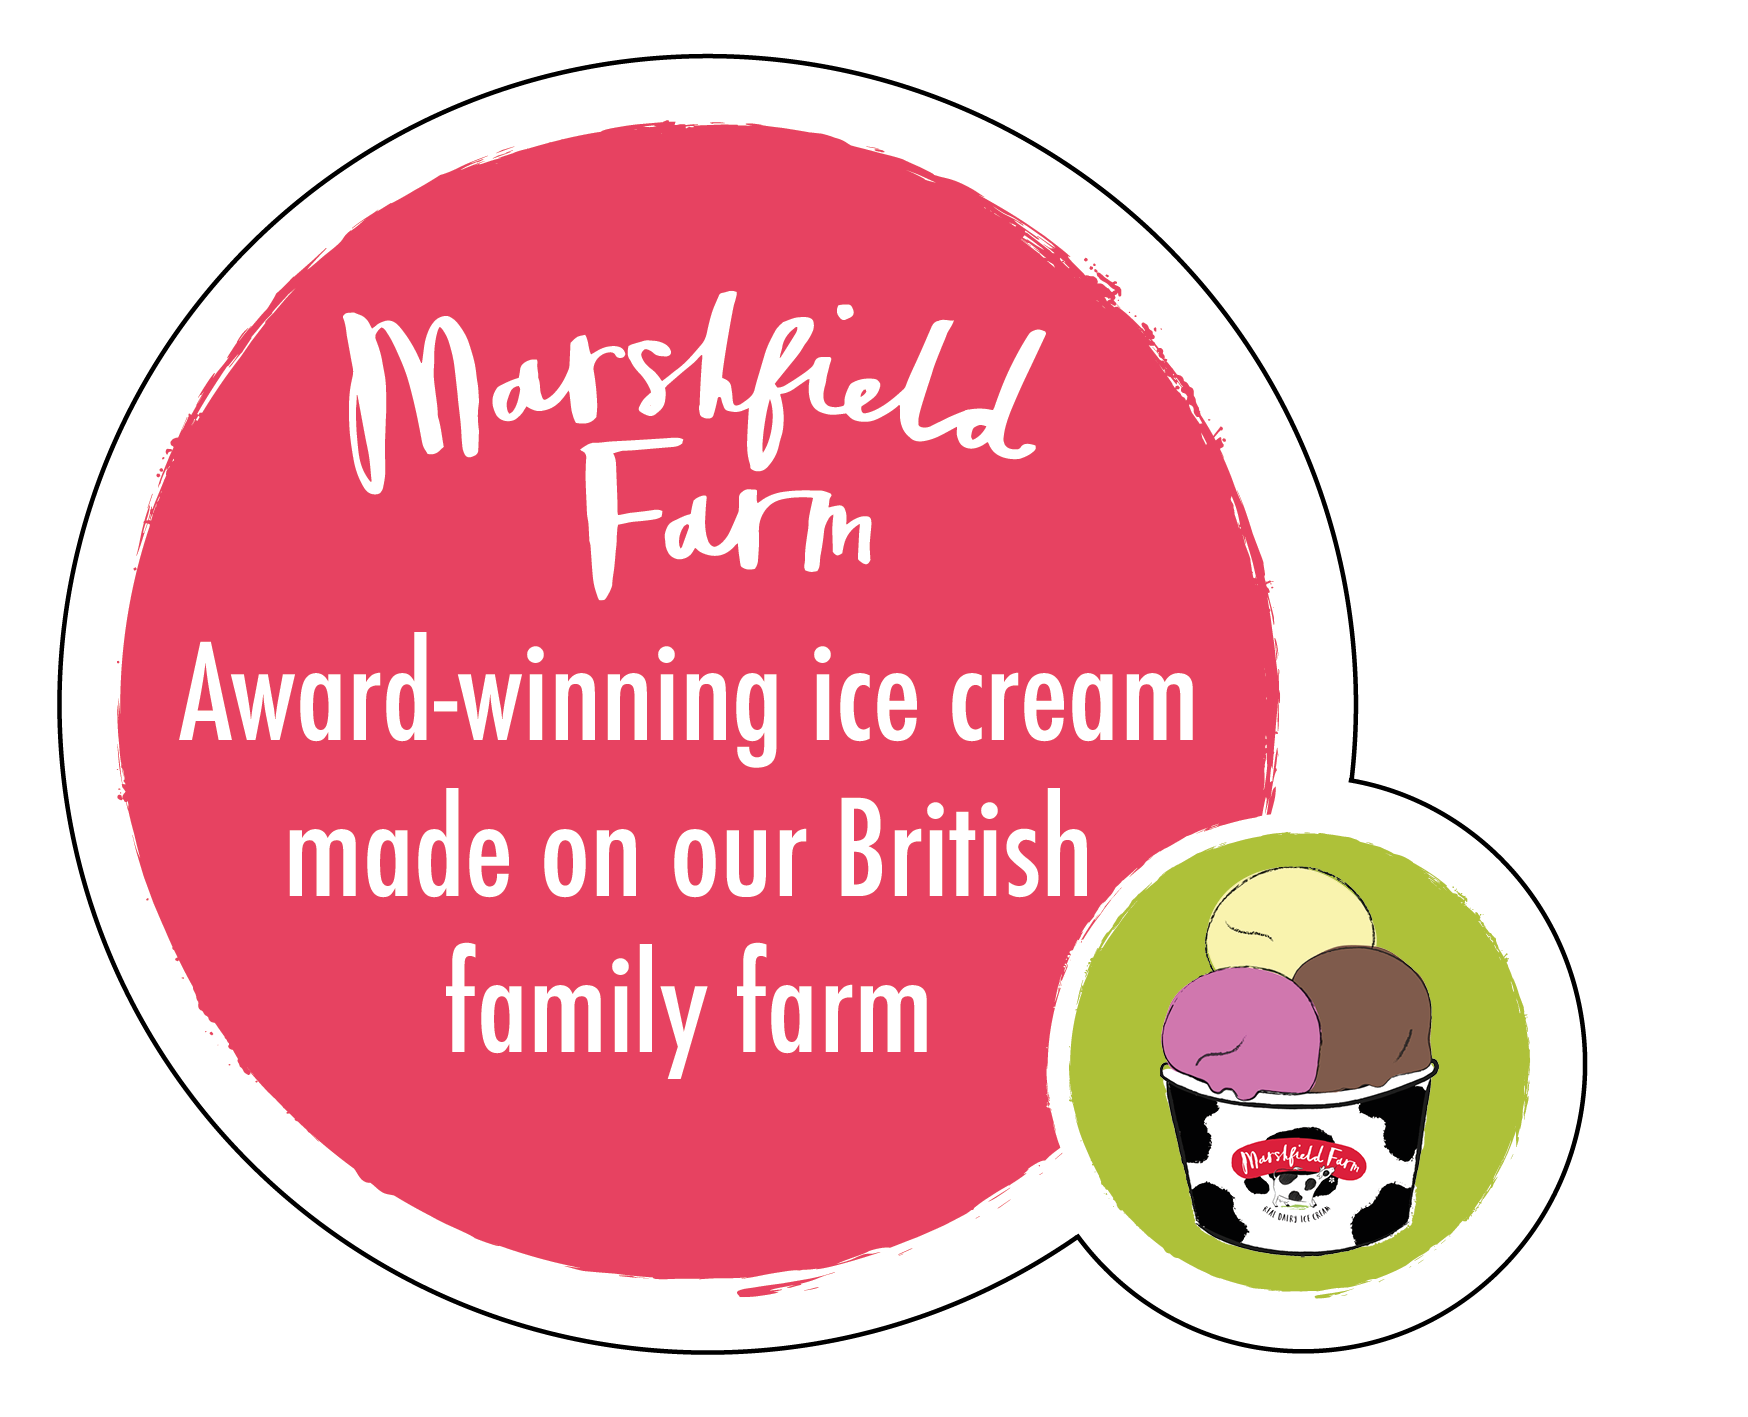 Marshfield Farm Branded Freezer Sticker